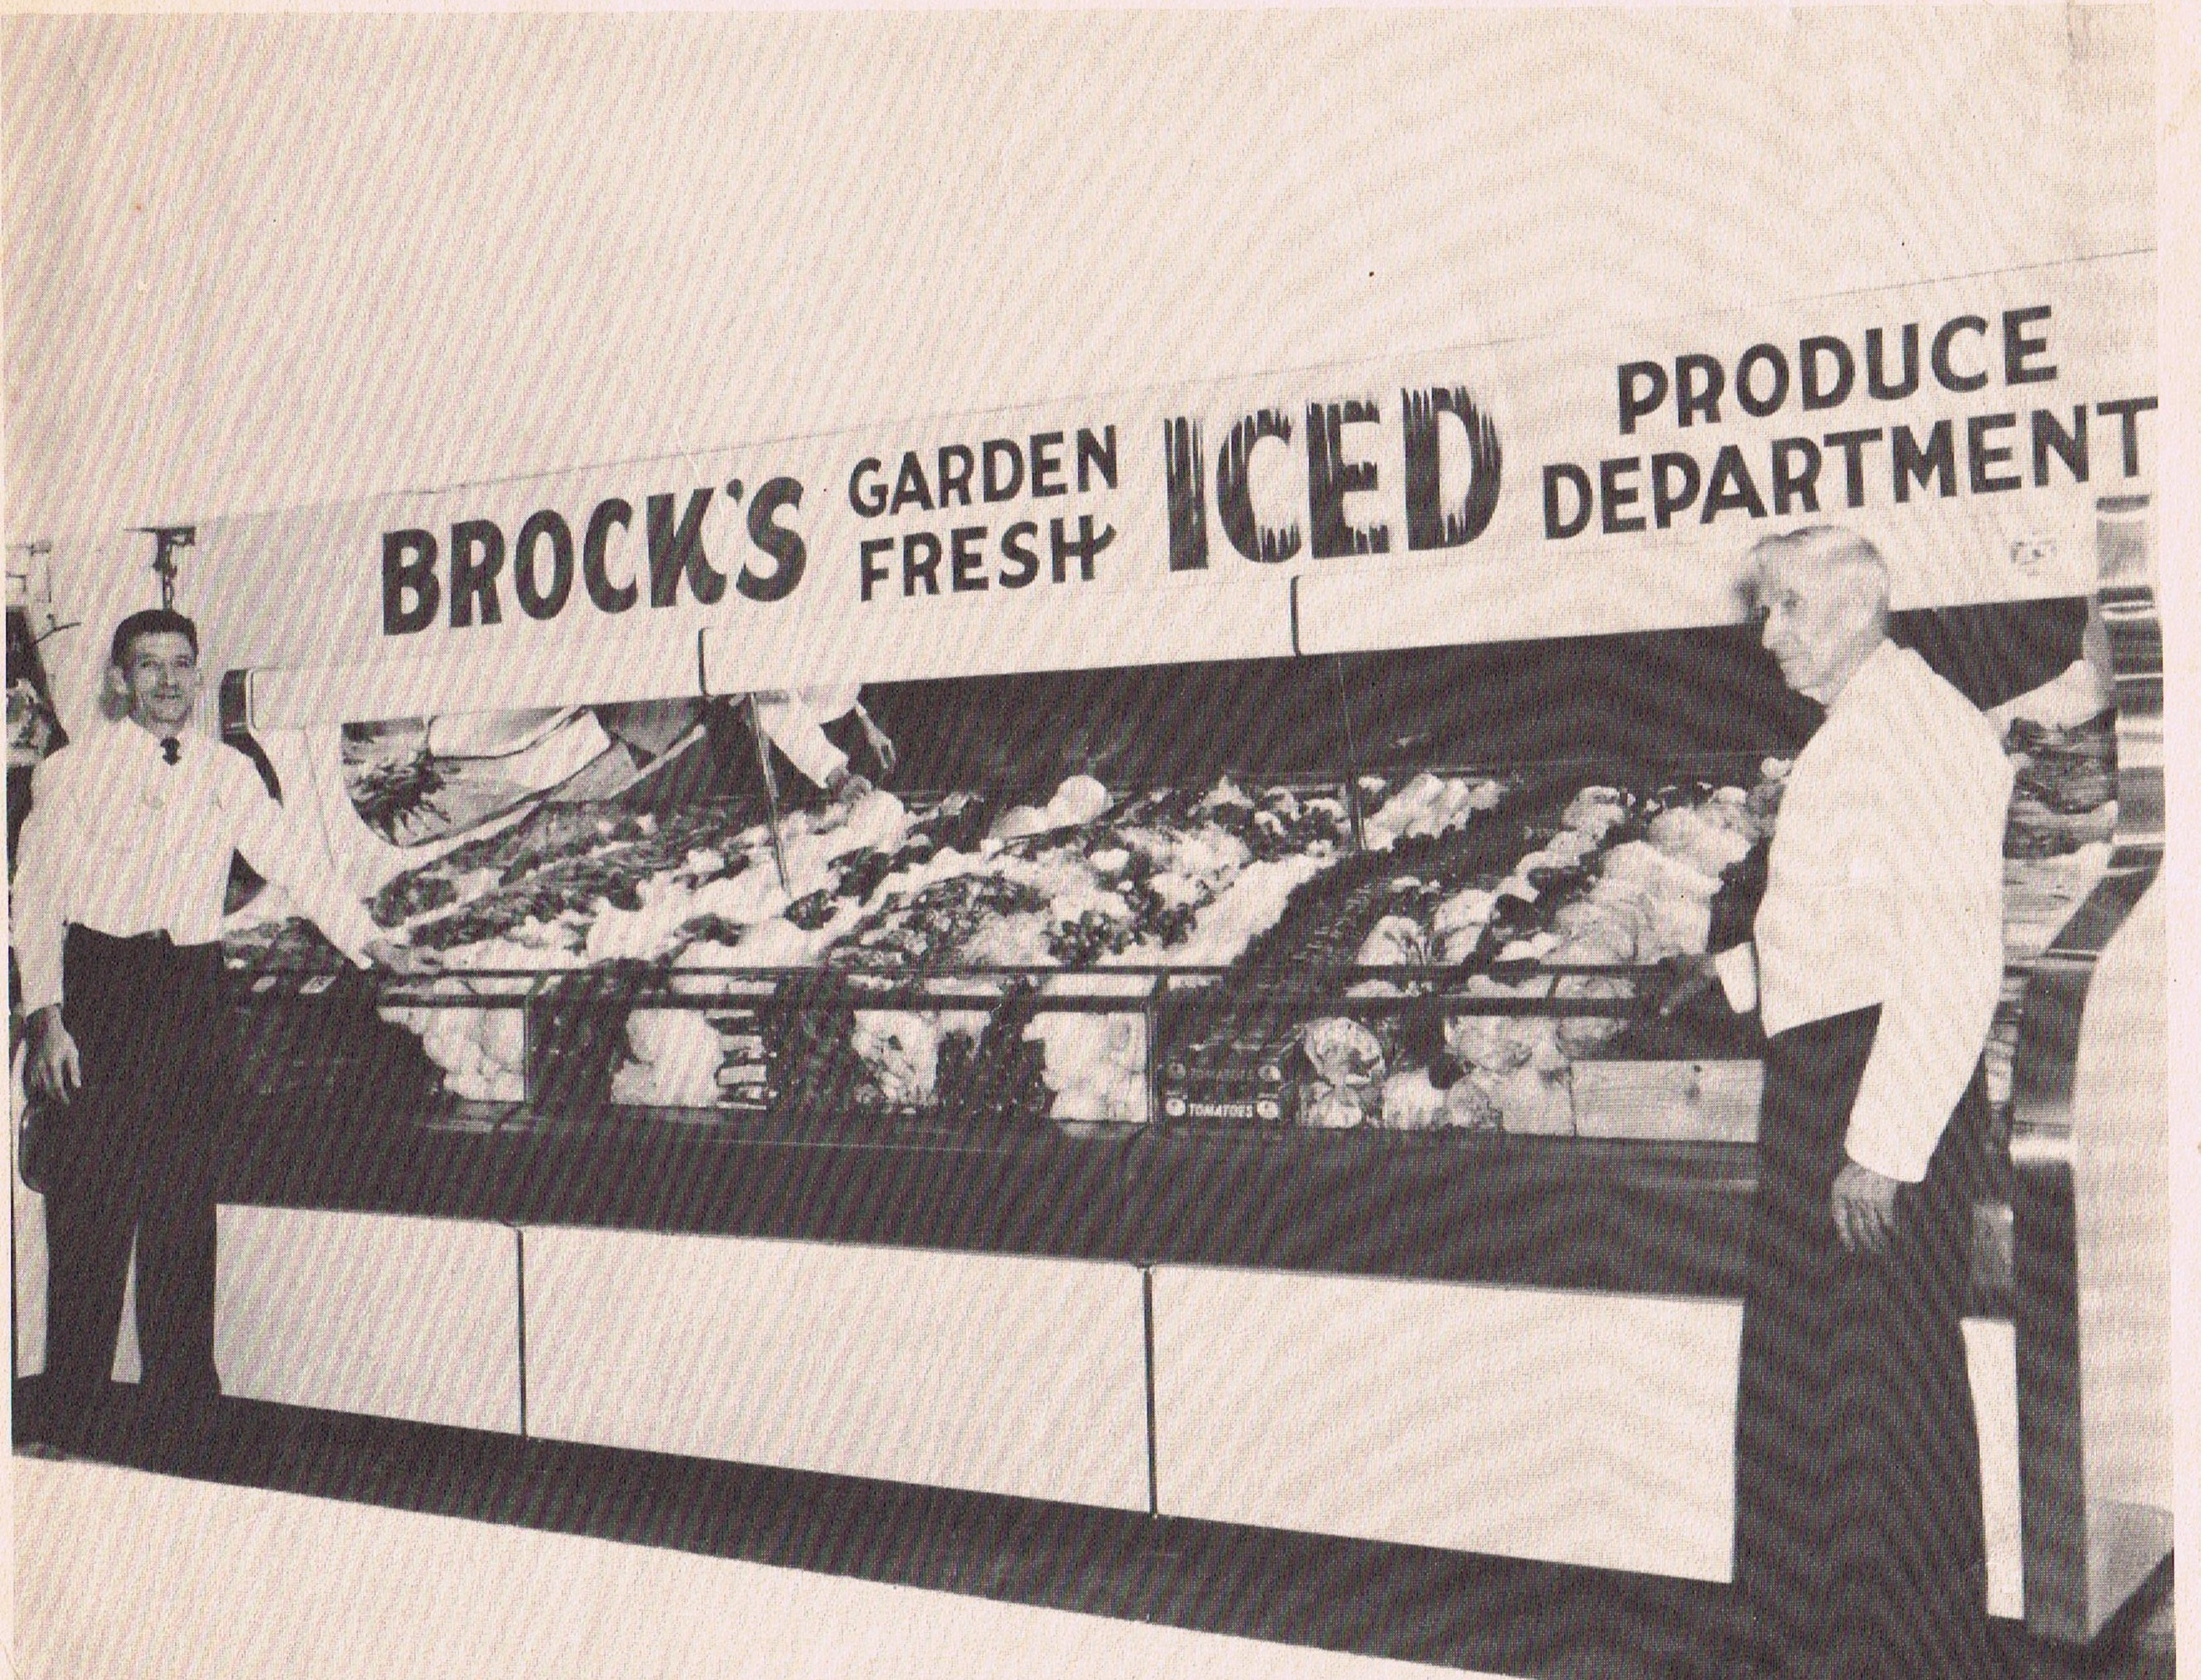 Brock's Grocery Store